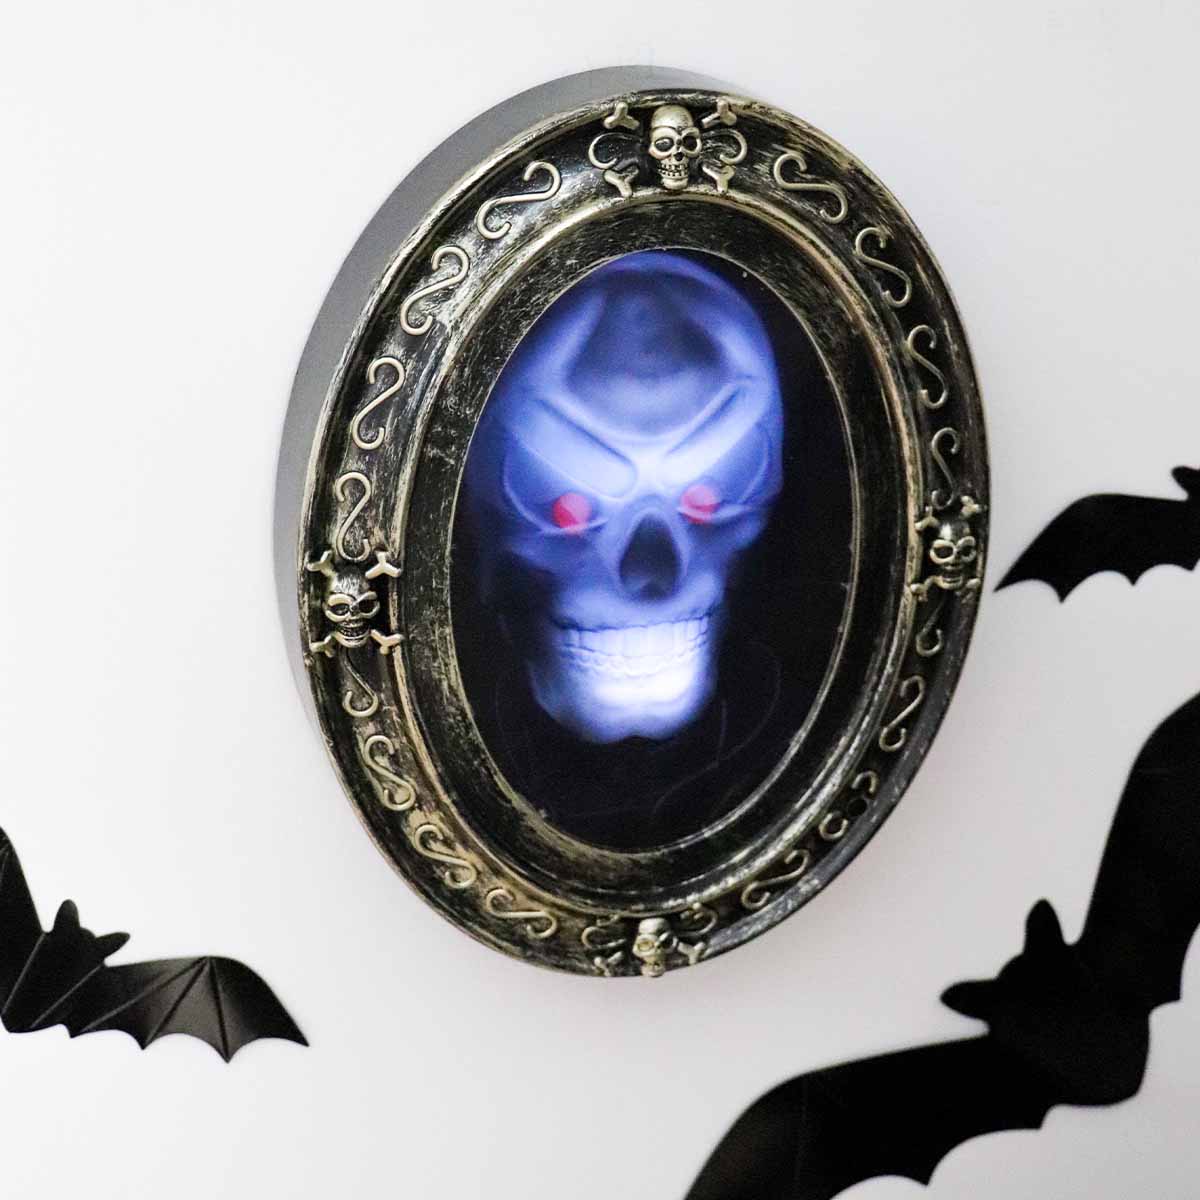 Haunted mirror. With spooky sounds Gadget Flying Tiger Copenhagen 